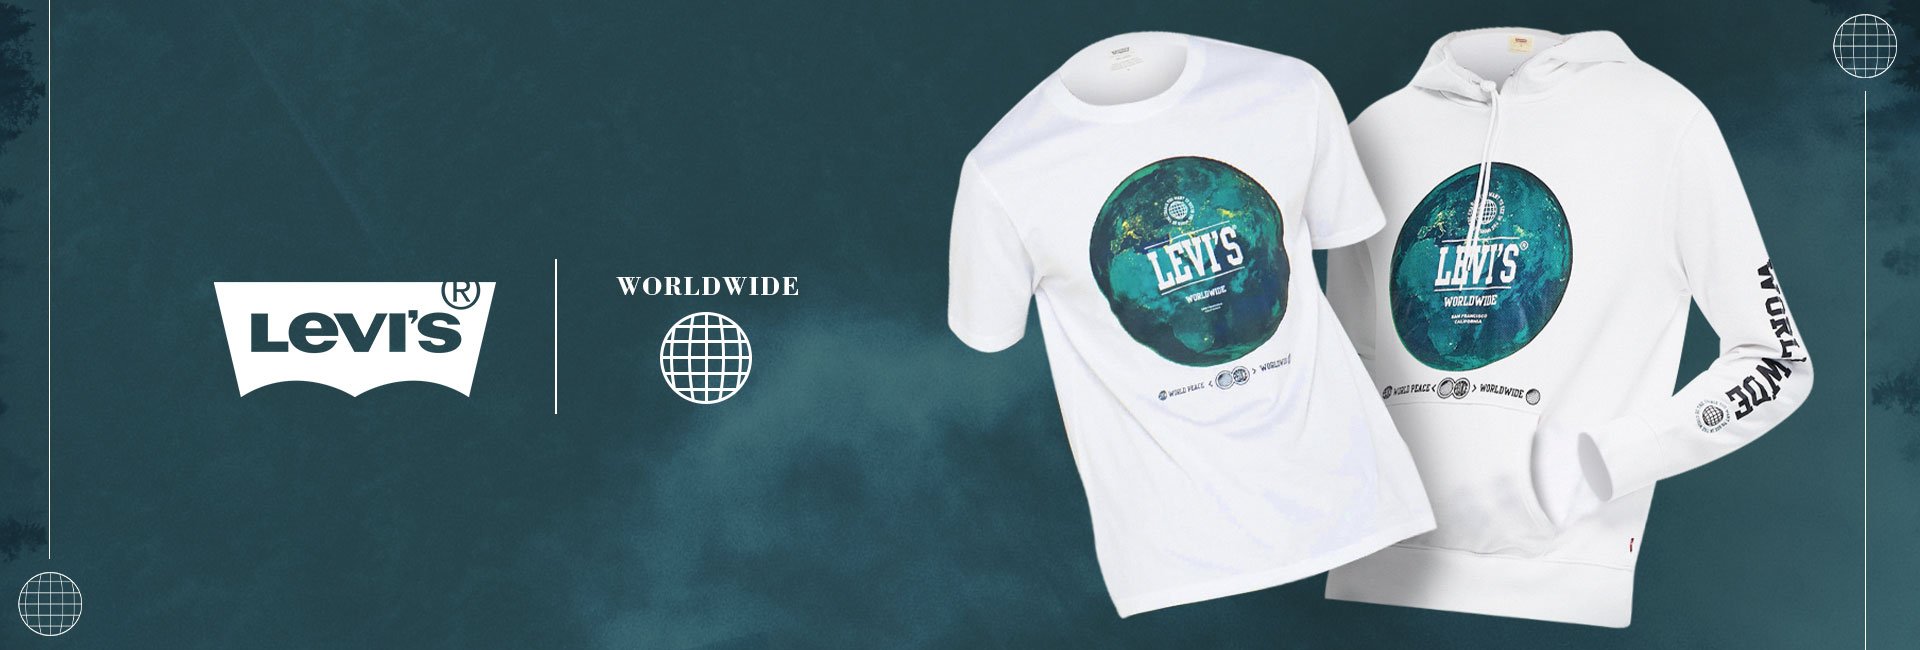 Levi's Worldwide